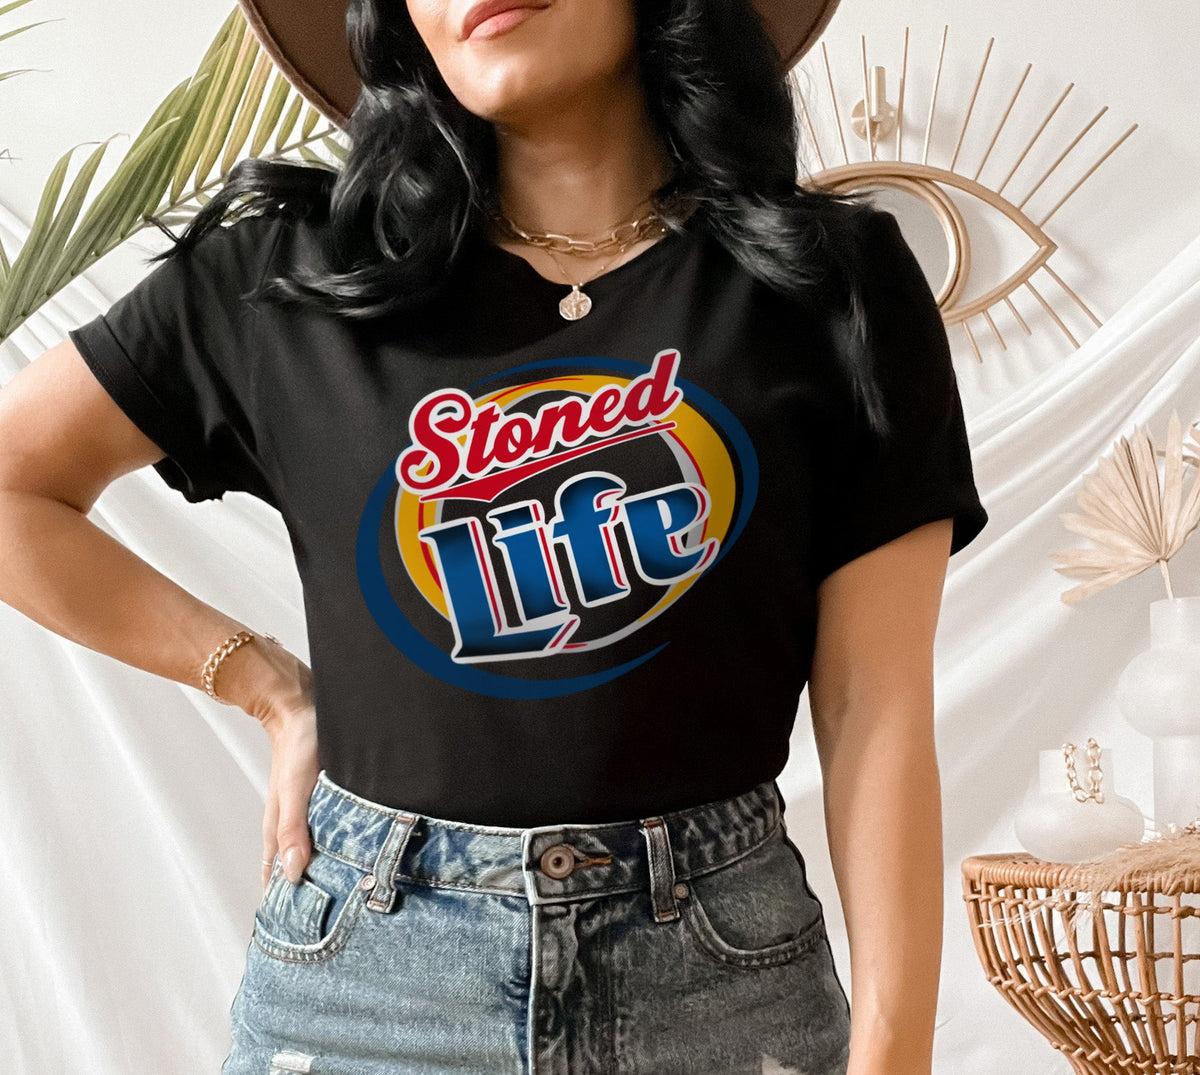 Black shirt that says stoned life - HighCiti